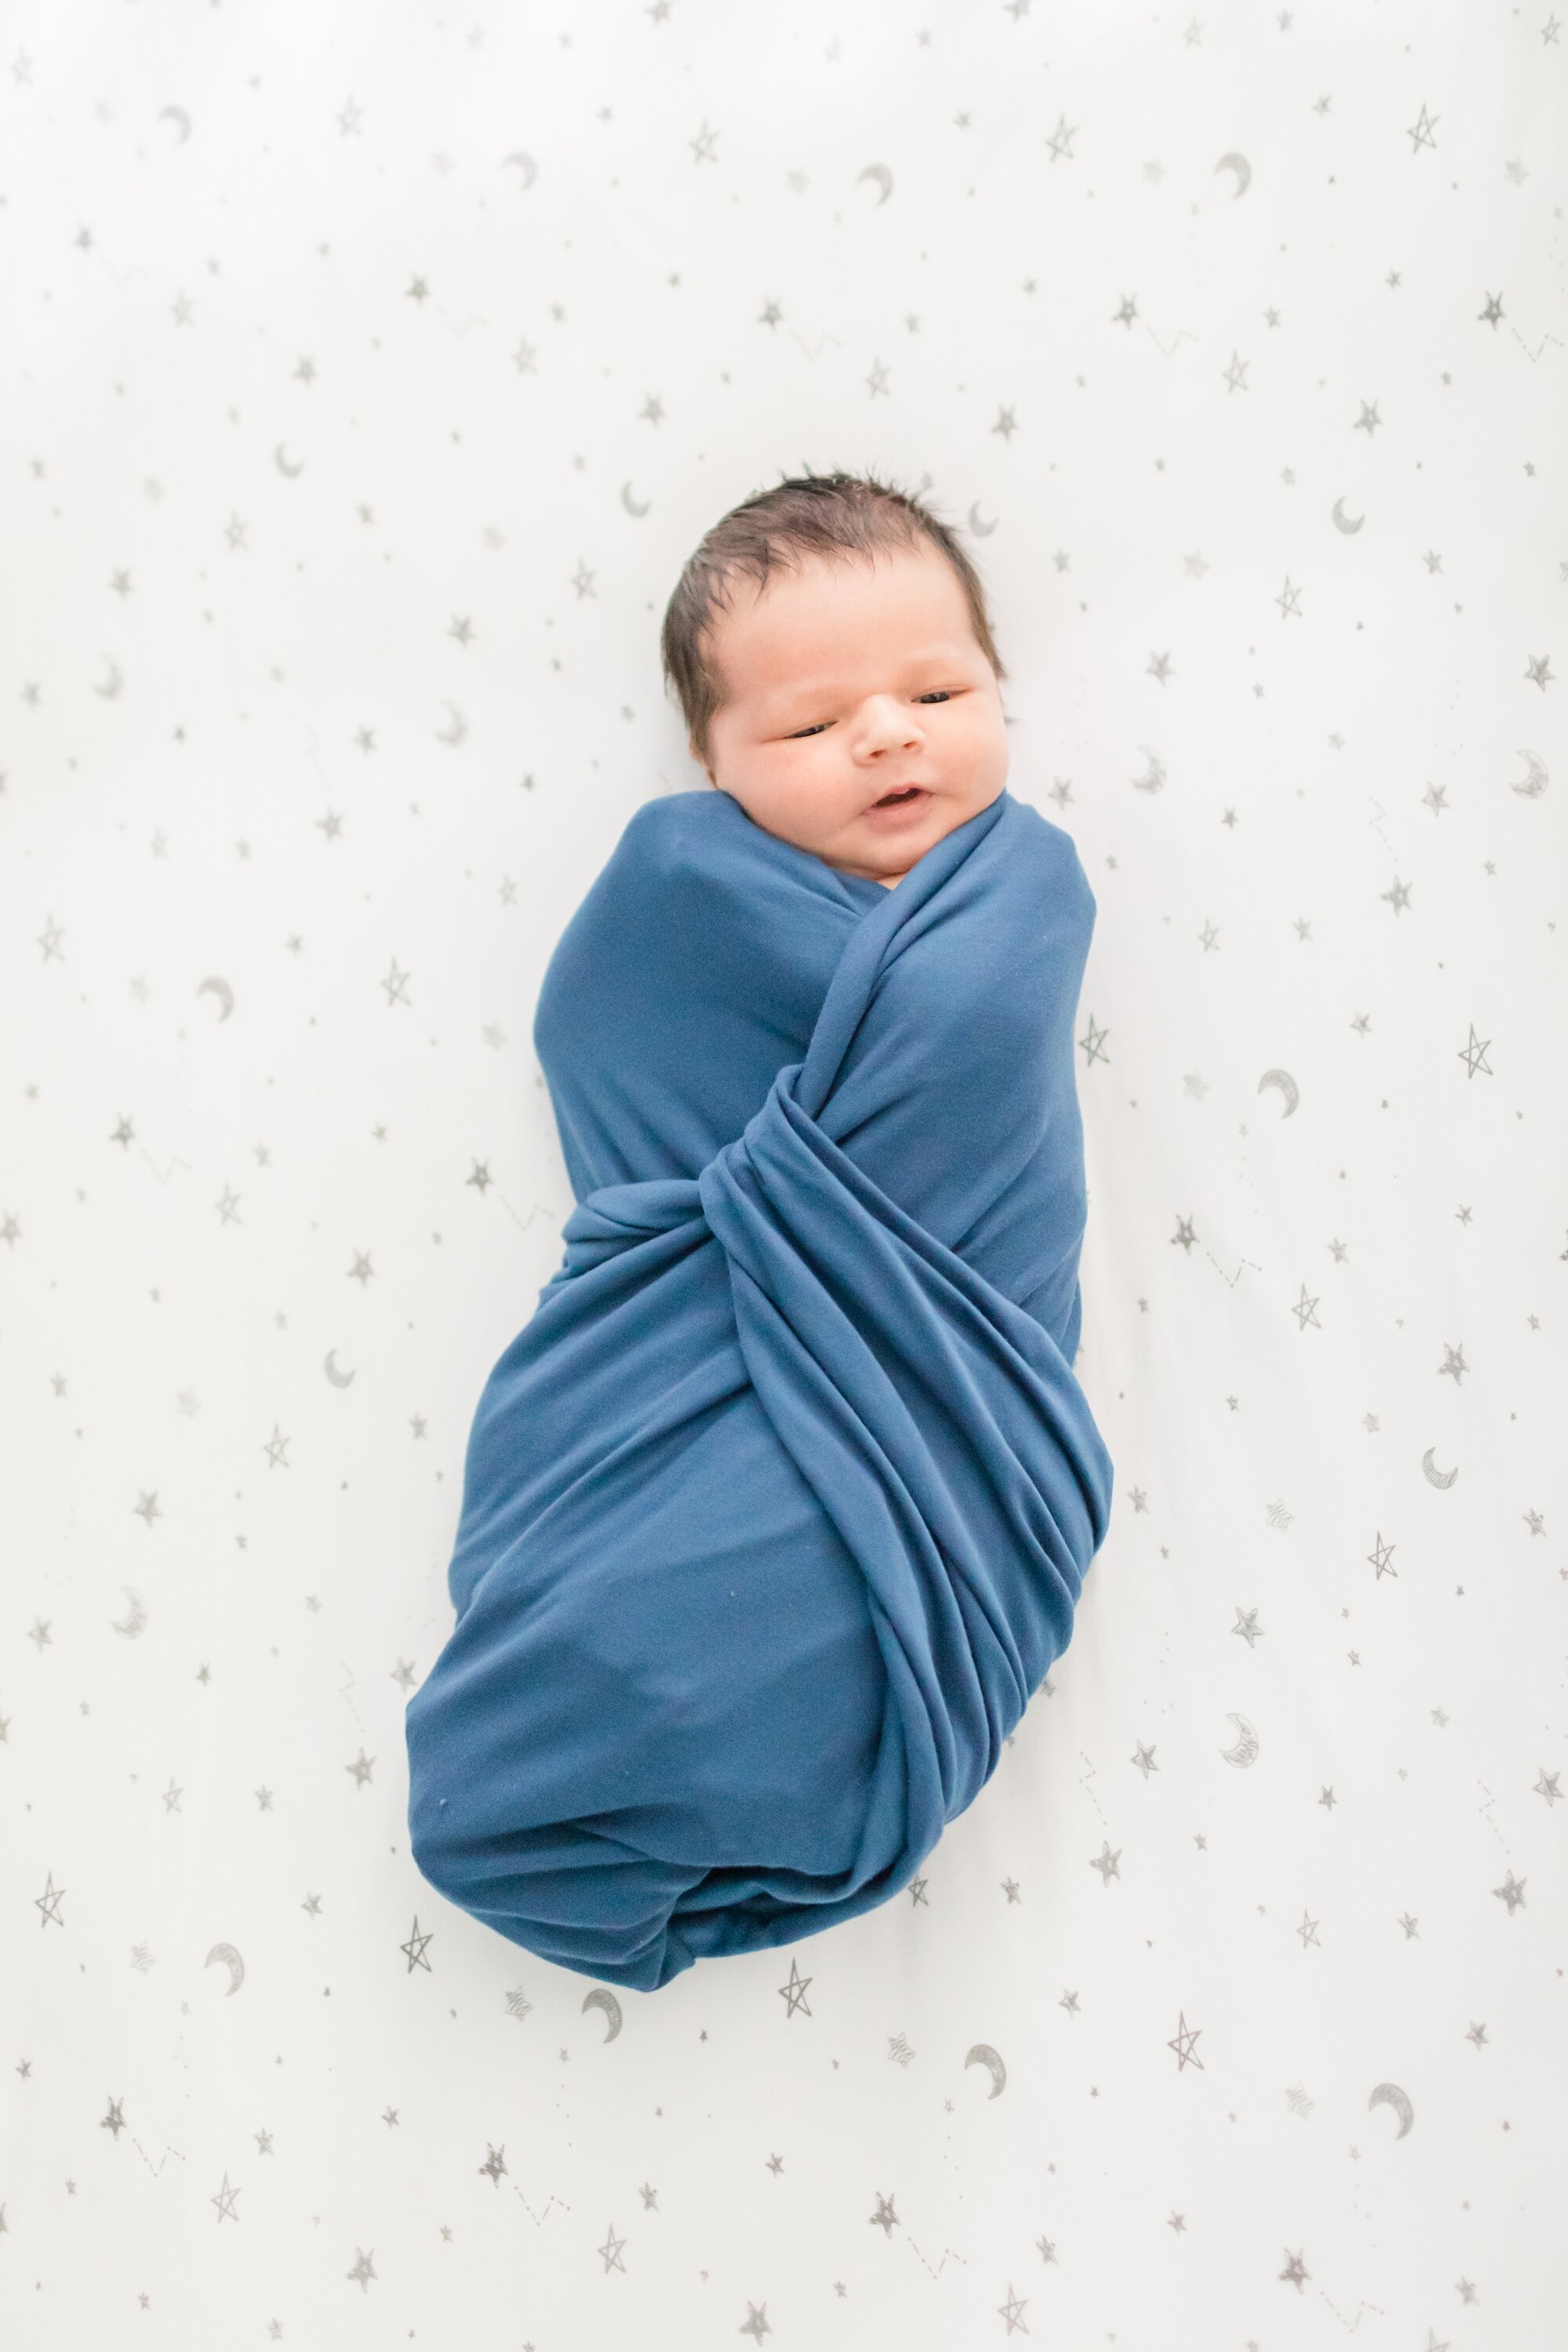 Bayne Newborn-16_Maryland-Newborn-Photographer-anna-grace-photography.jpg